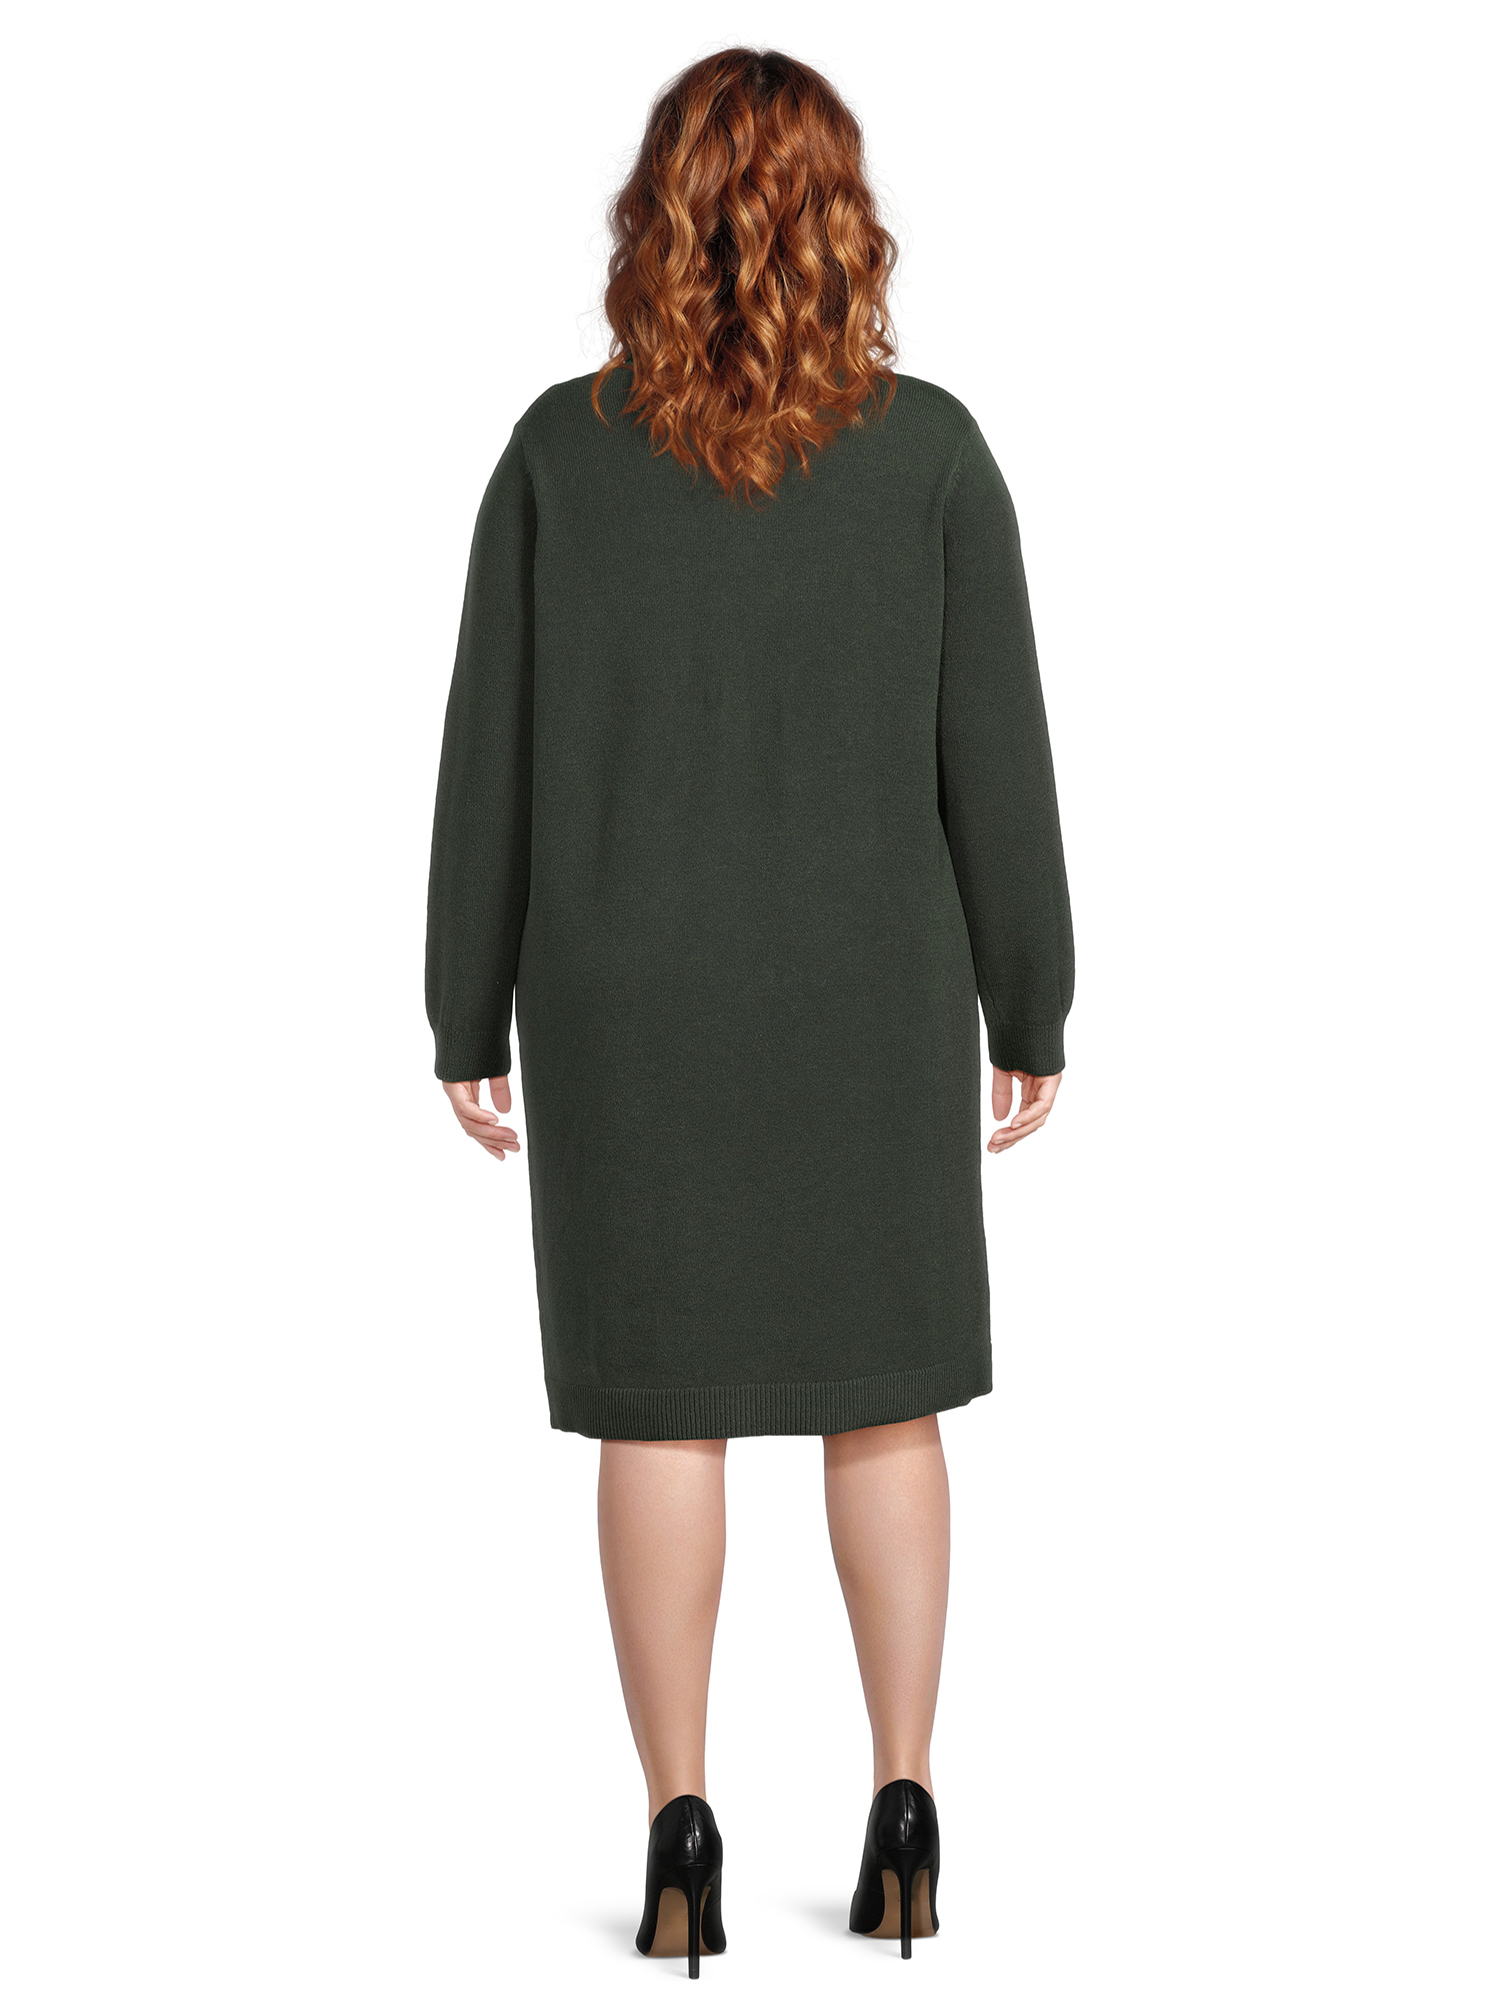 Terra & Sky Women's Plus Size Turtleneck Tunic Length Sweater Dress - image 3 of 5